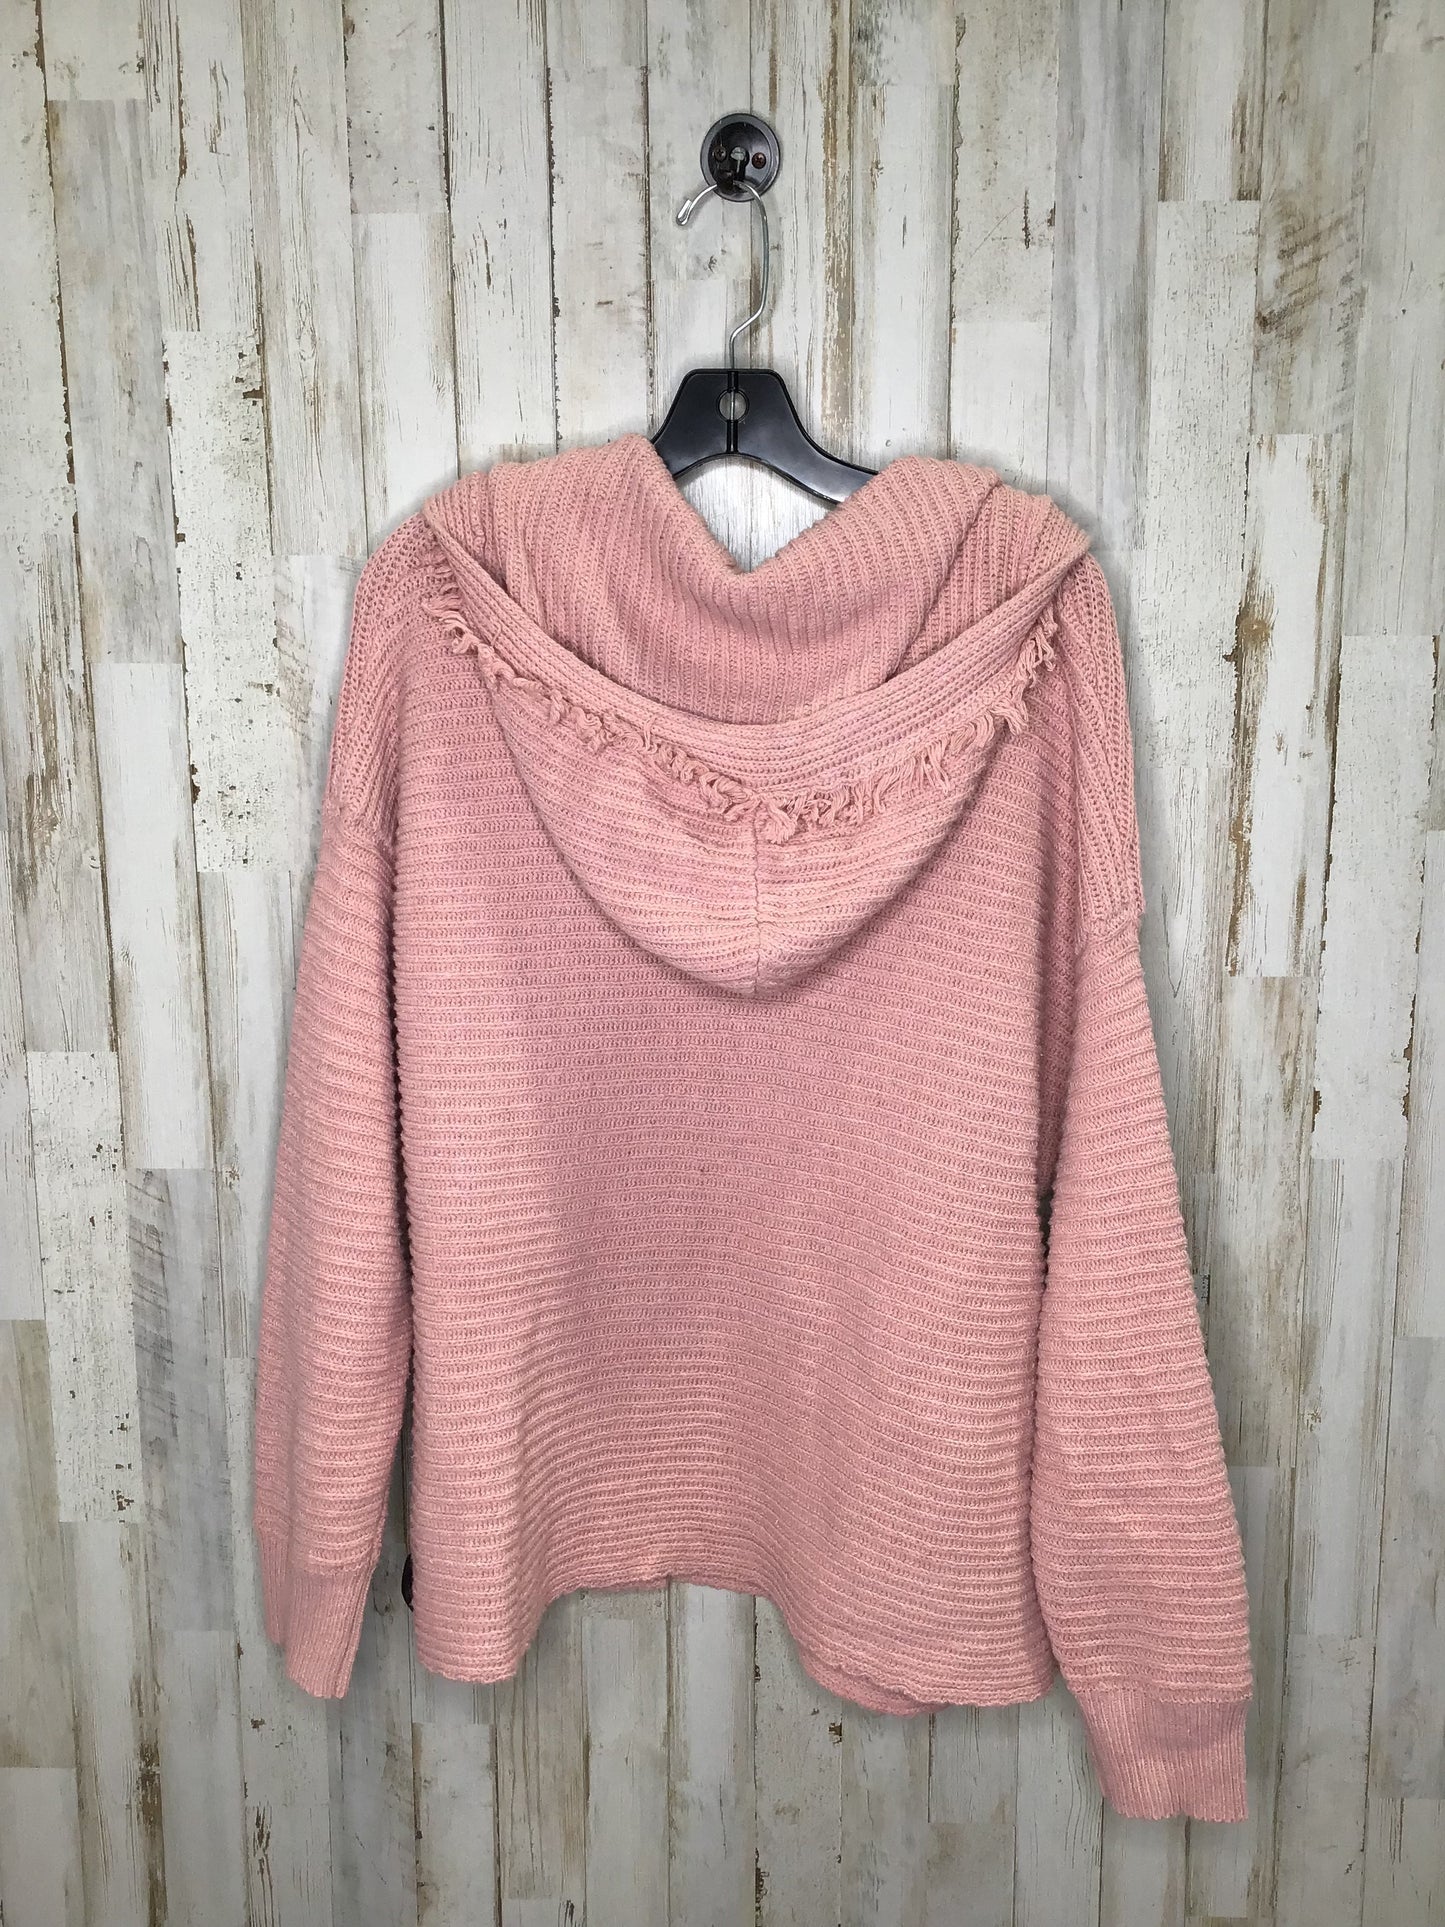 Sweater By Bibi  Size: L